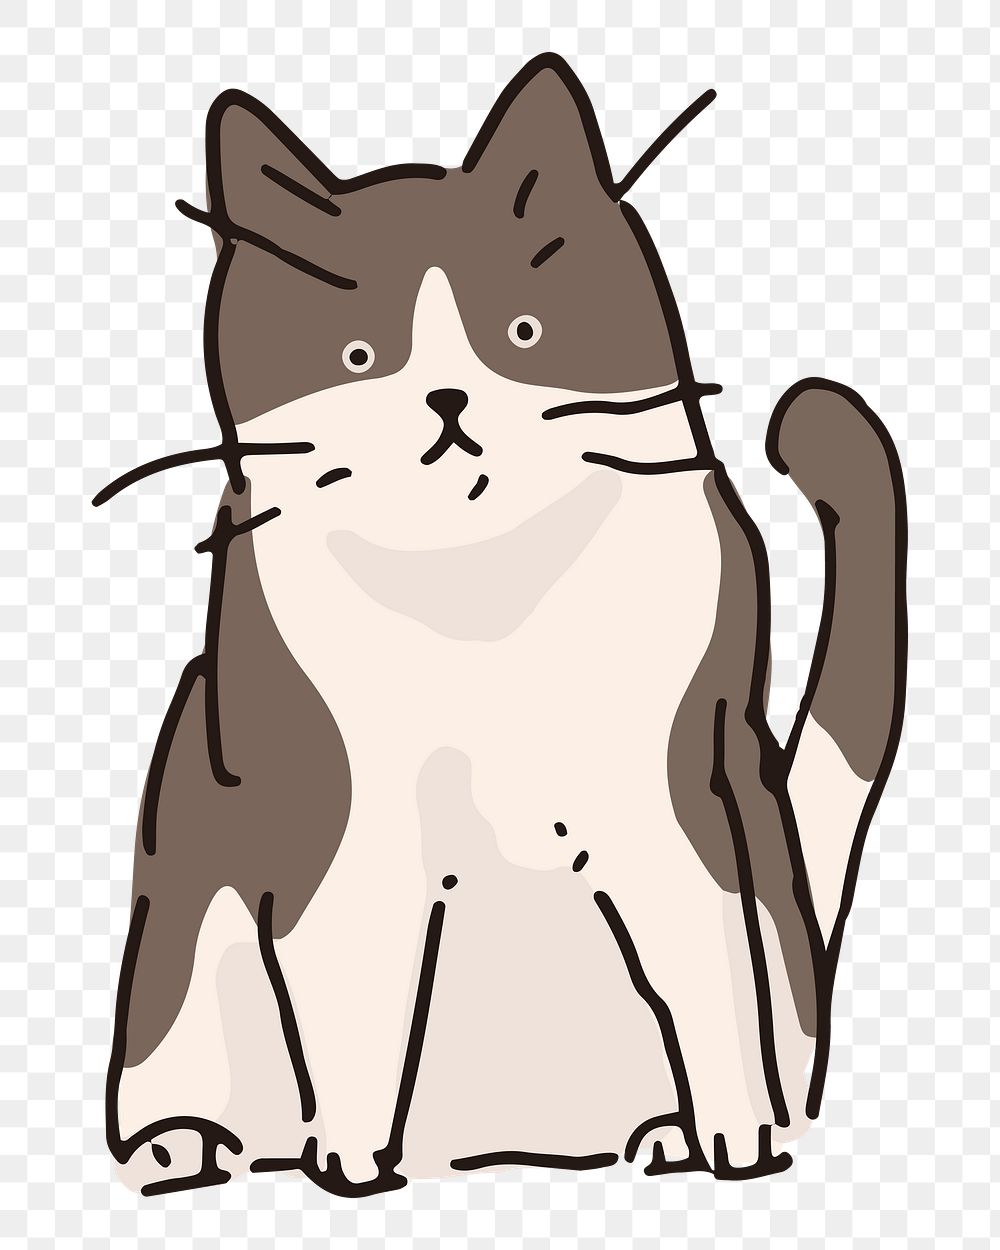 Png cute cat doodle sticker, transparent background